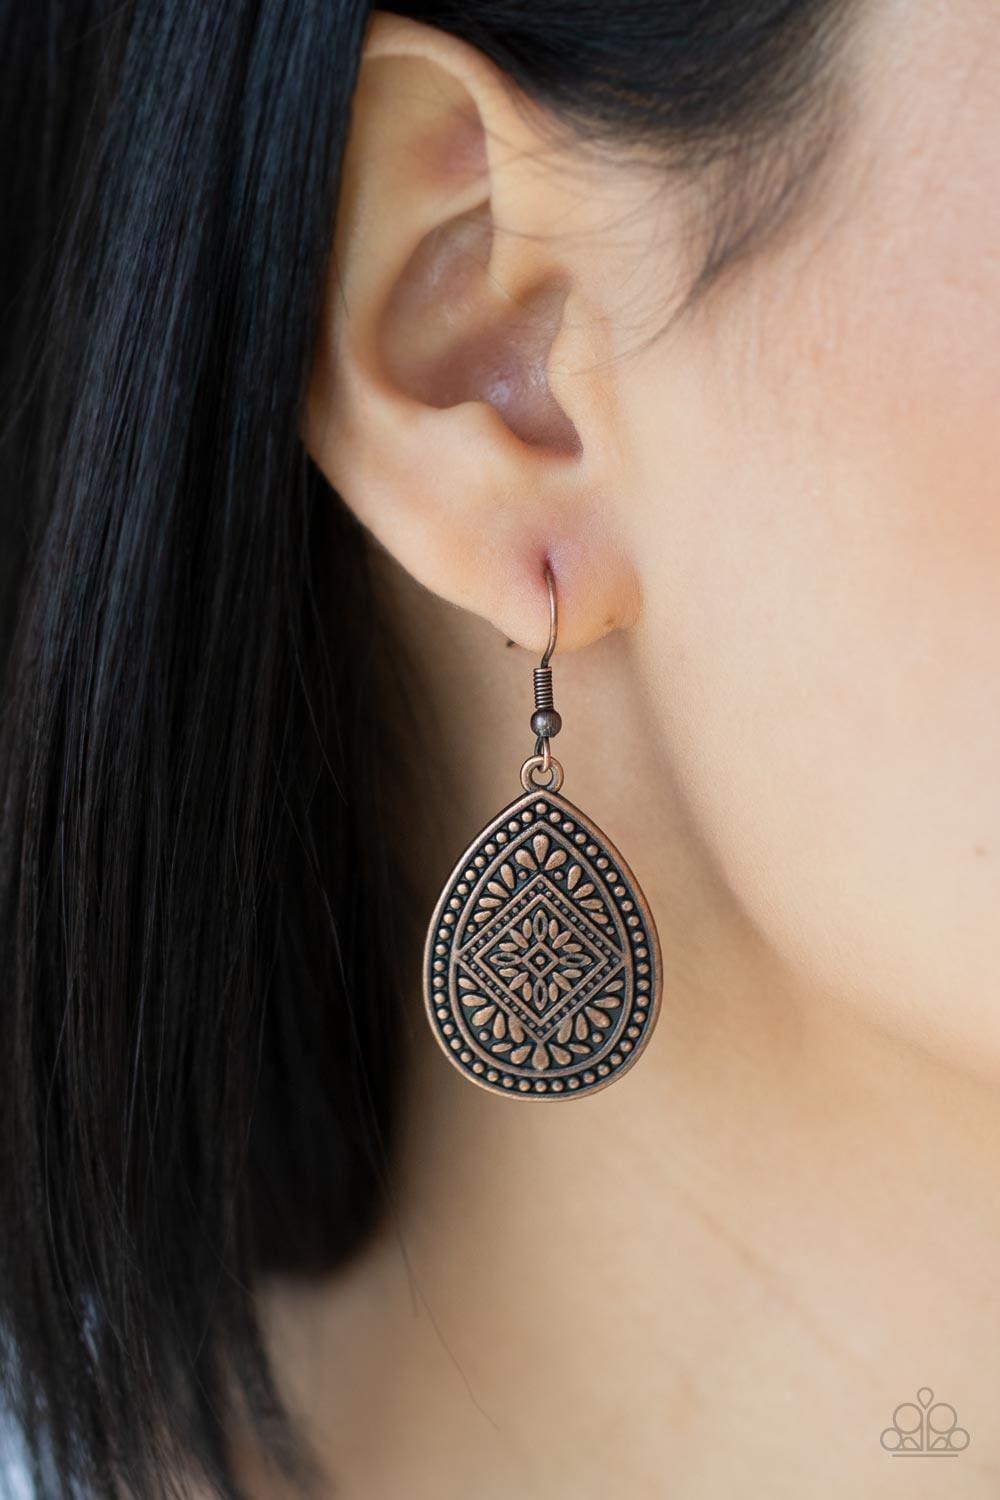 Paparazzi Accessories - Mayan Mecca - Copper Earrings - Bling by JessieK